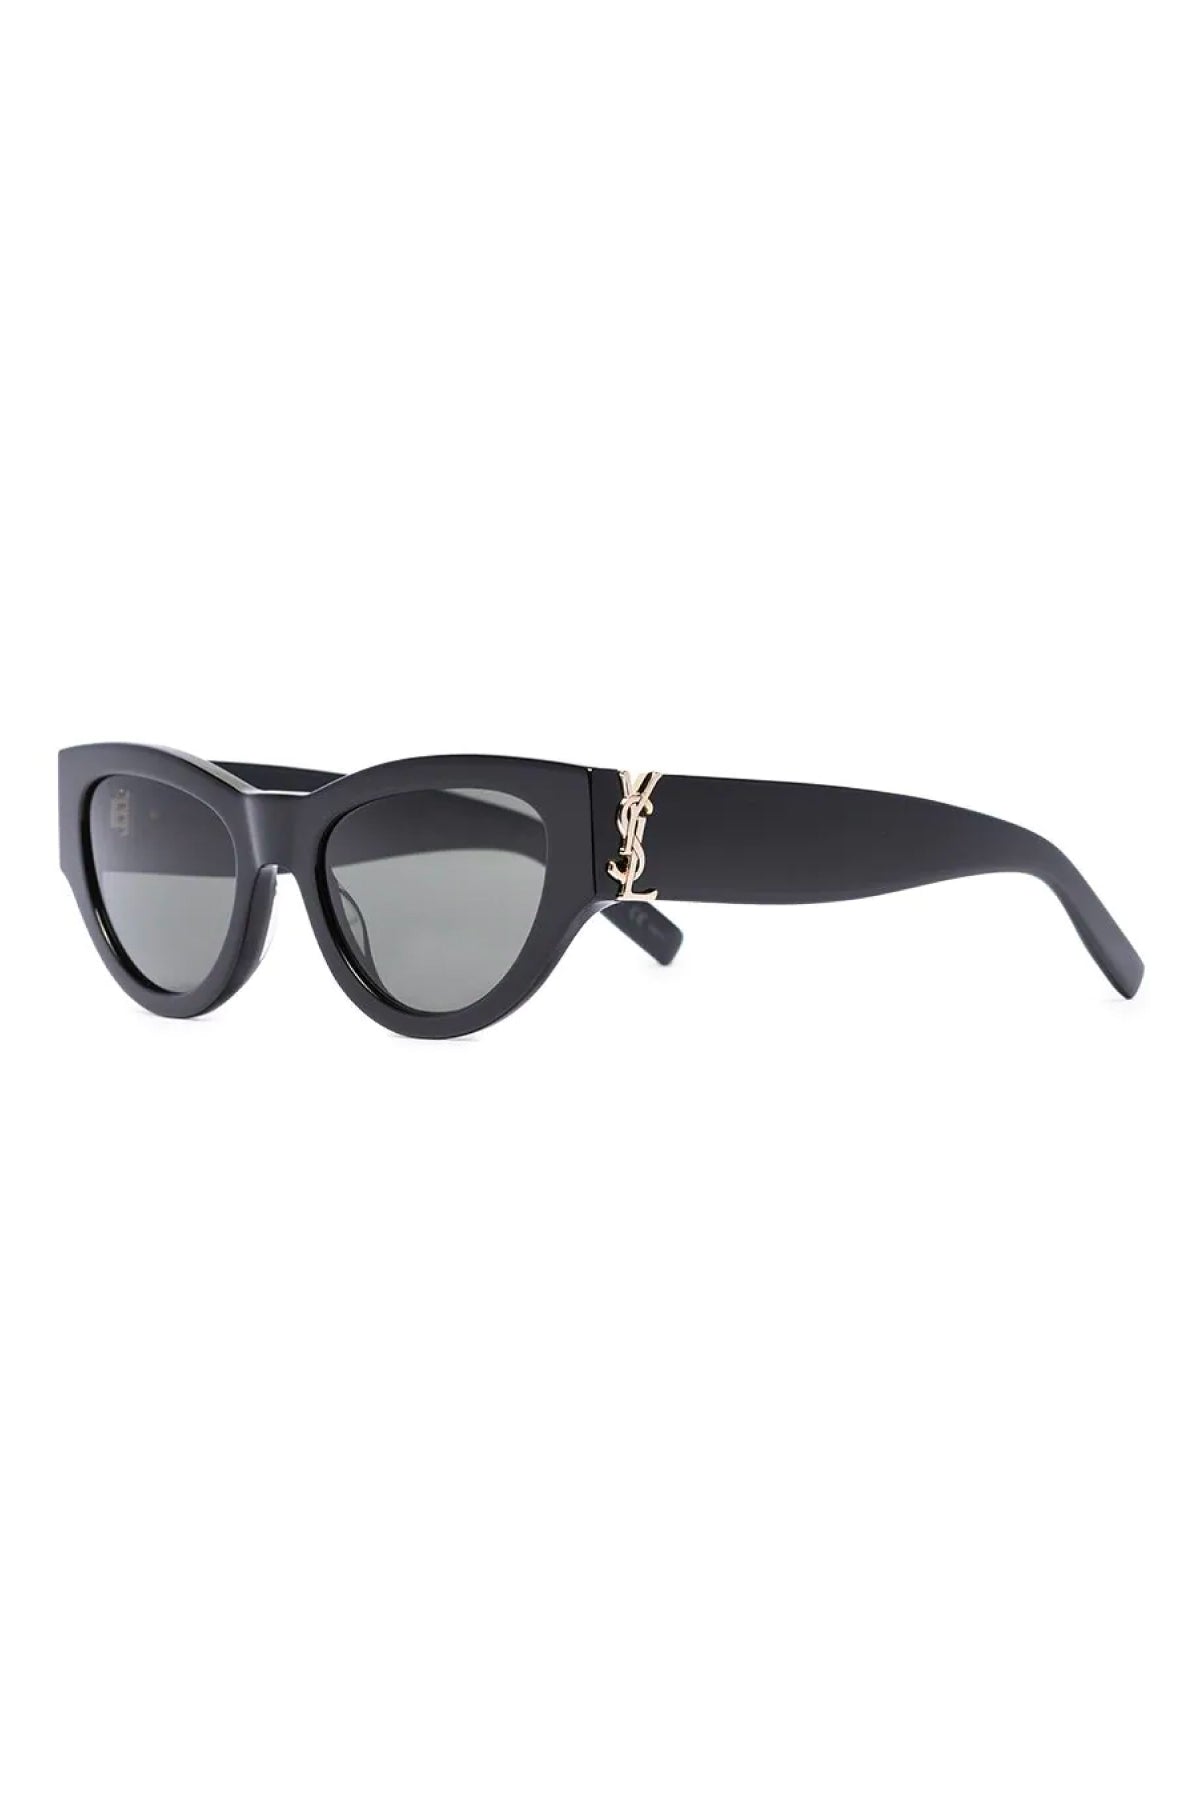 Saint Laurent YSL Cat Eye Sunglasses - Black